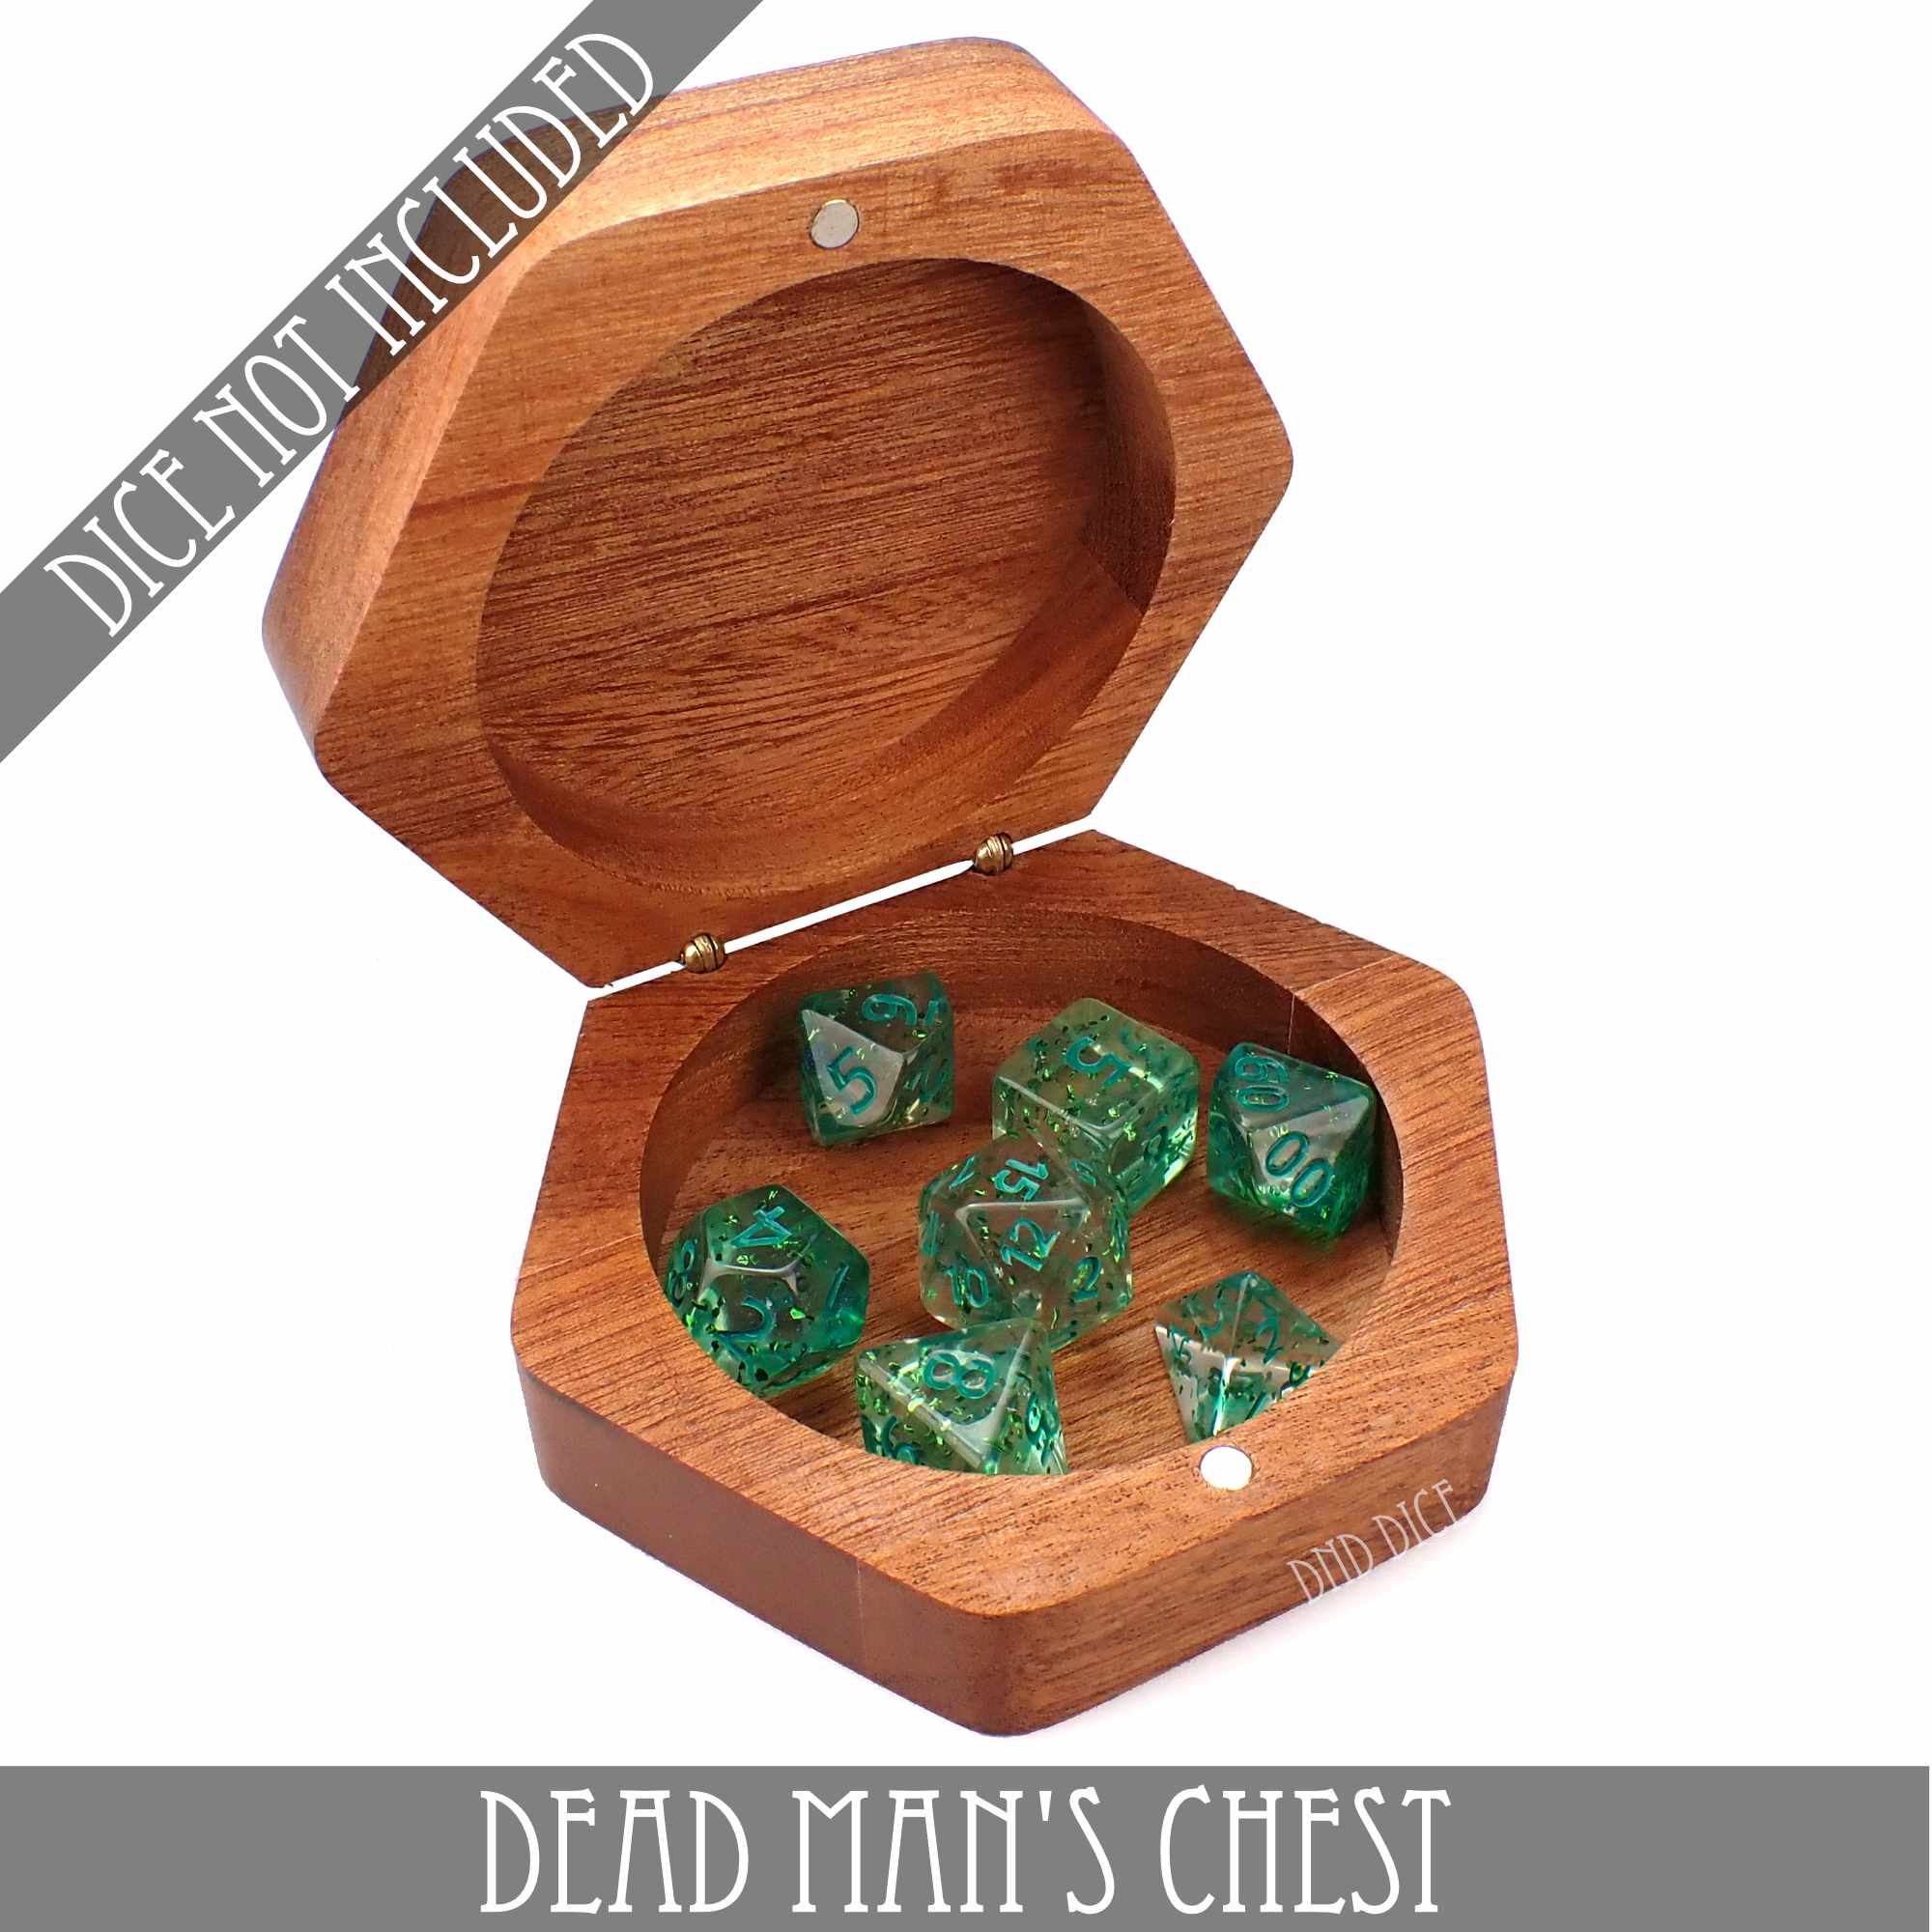 Dead Man's Chest Dice Box